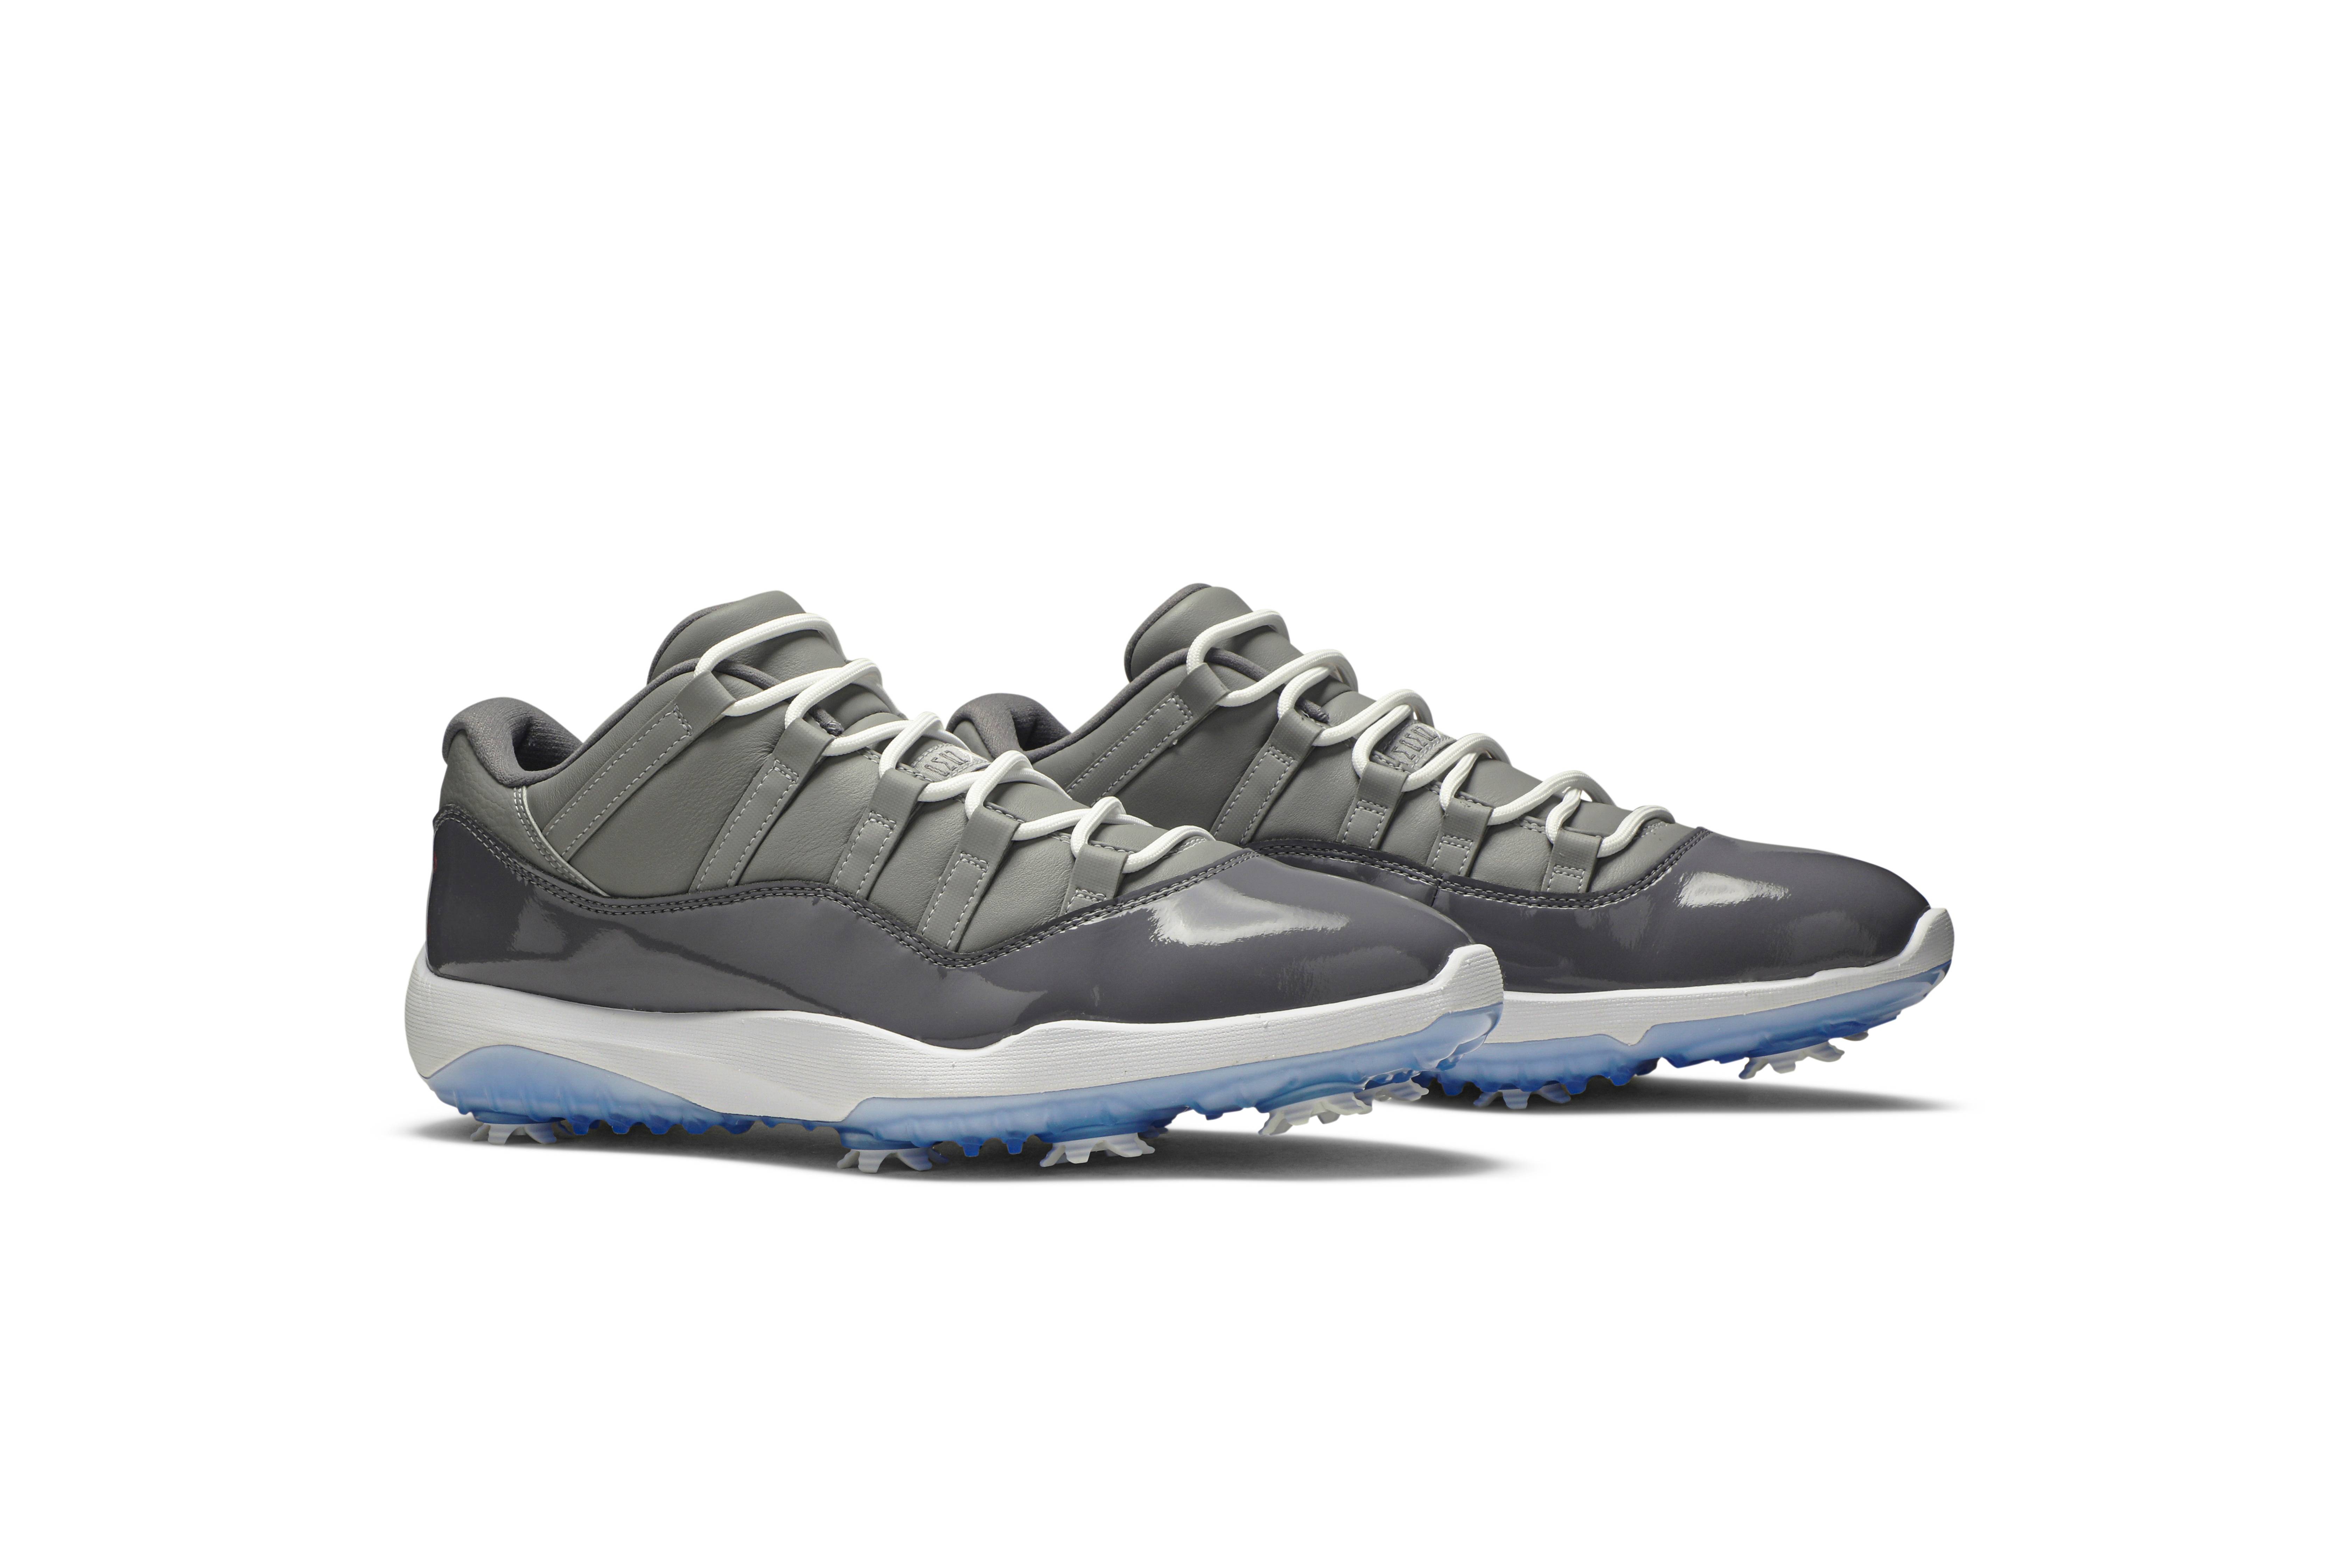 jordan 11 cool grey golf shoes